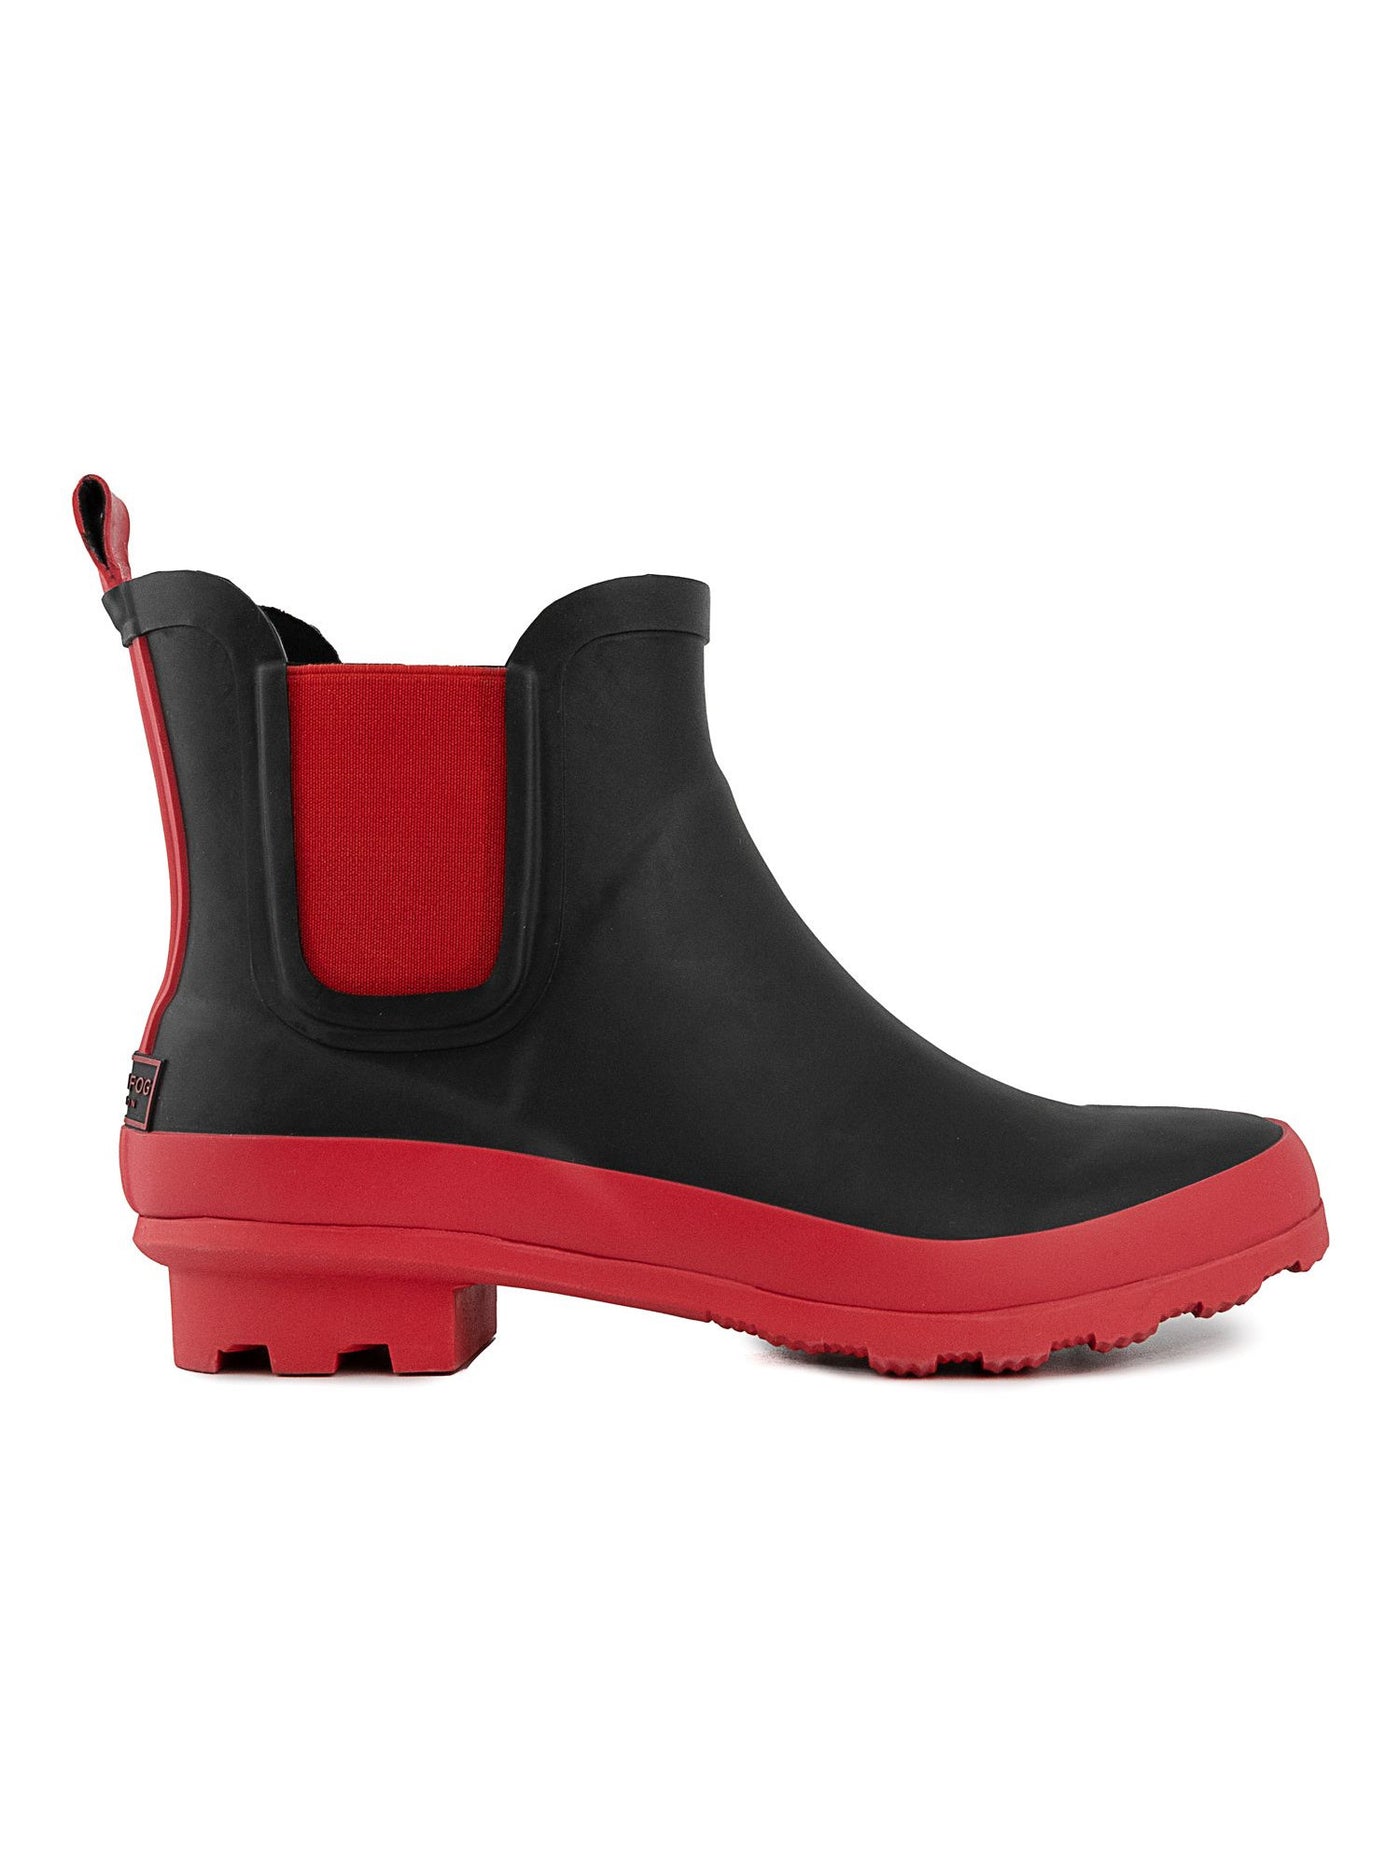 LONDON FOG Womens Black Removable Insole Goring Wembley Round Toe Block Heel Rain Boots 7 M